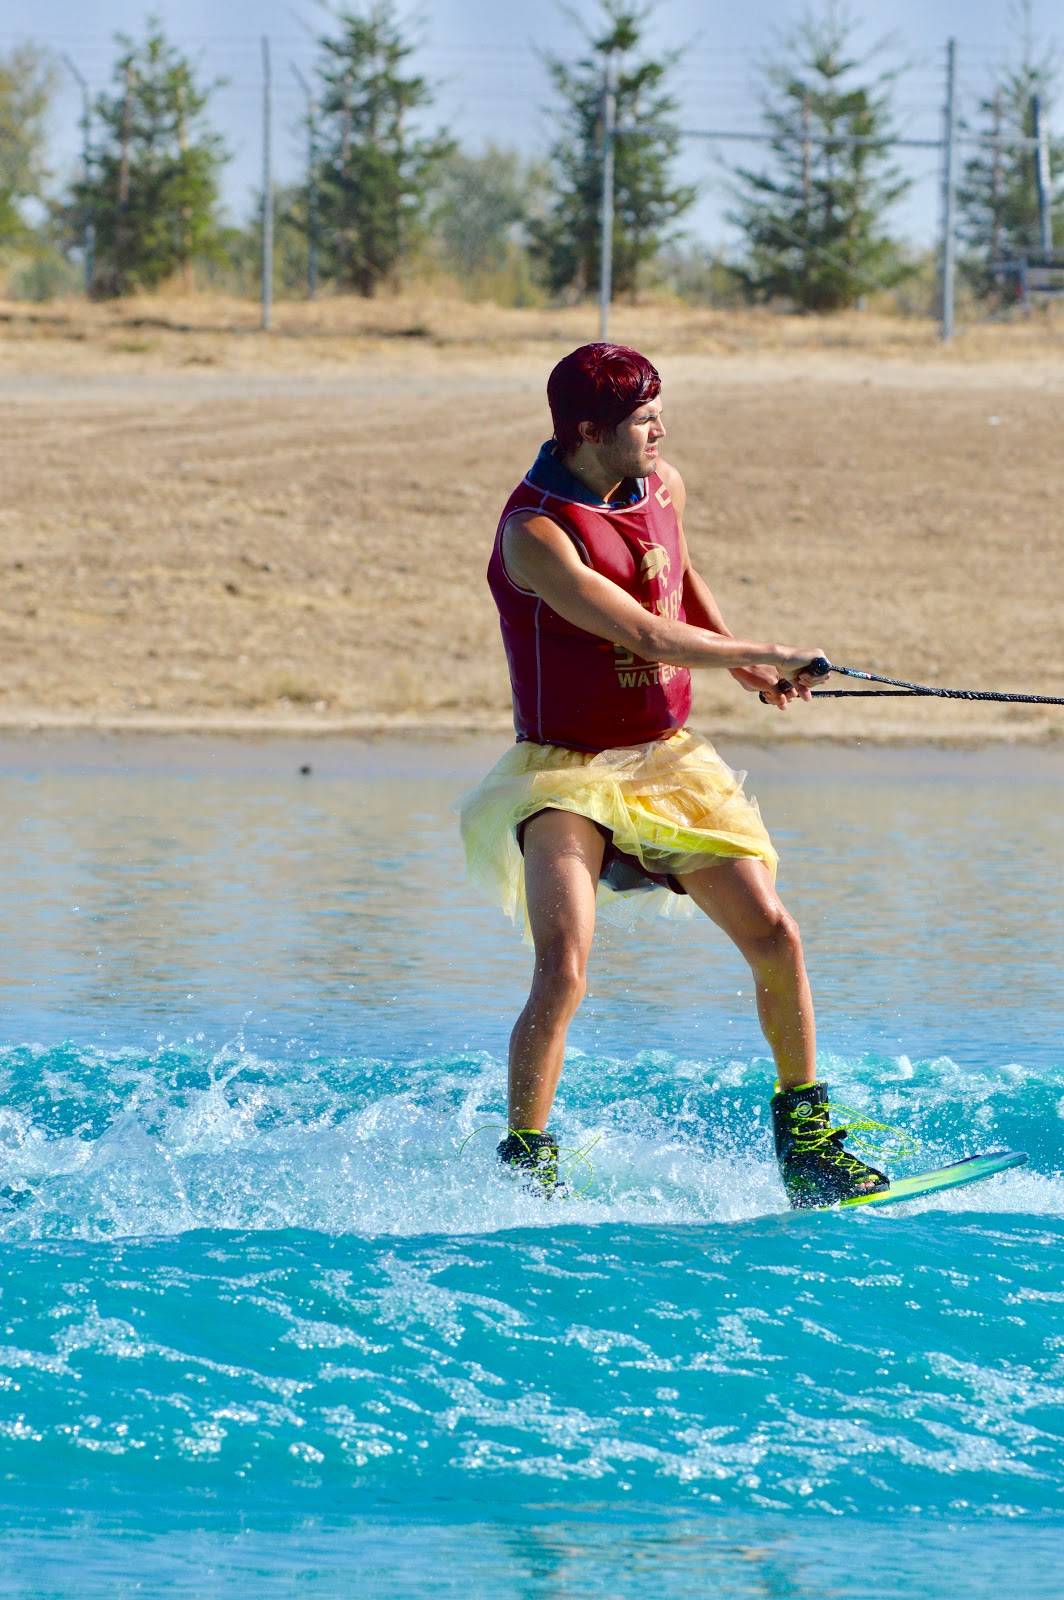 Water Ski club member on the water skiing